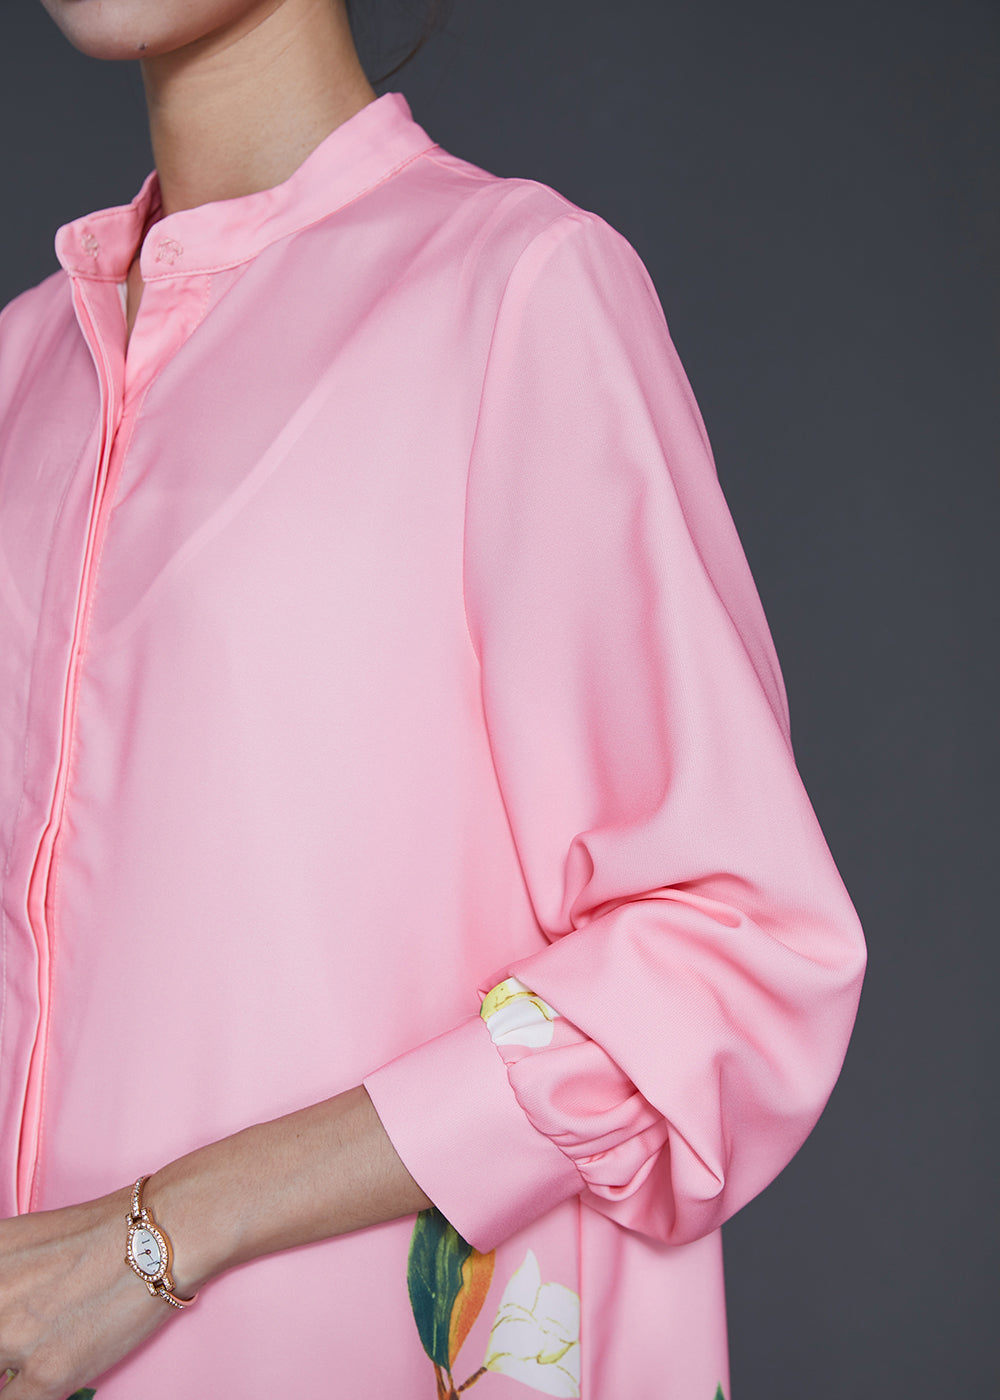 Classy Pink Stand Collar Print Chiffon Shirt Dresses Spring